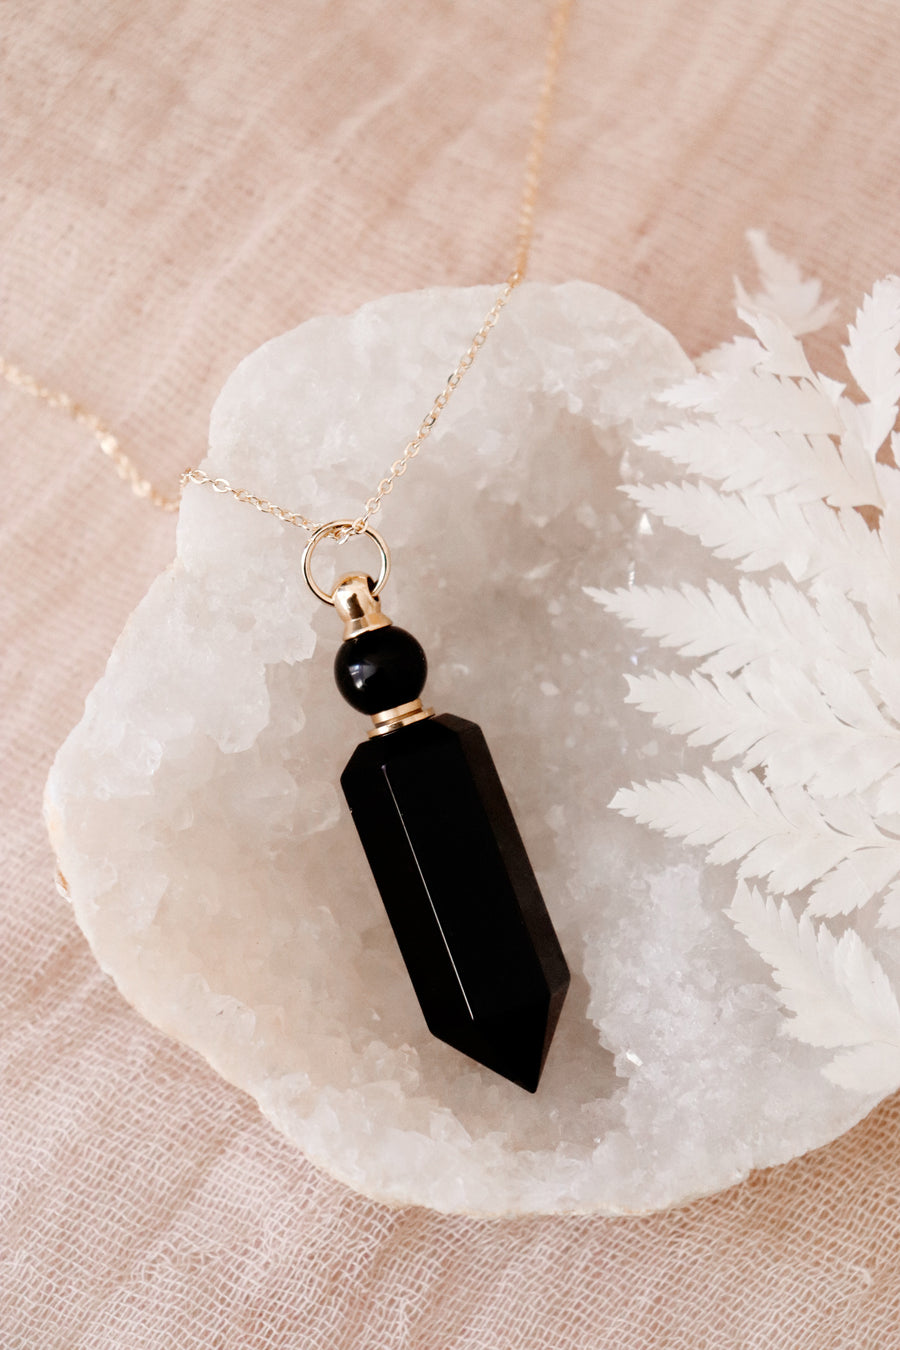 Potion bottle necklace | Obsidian